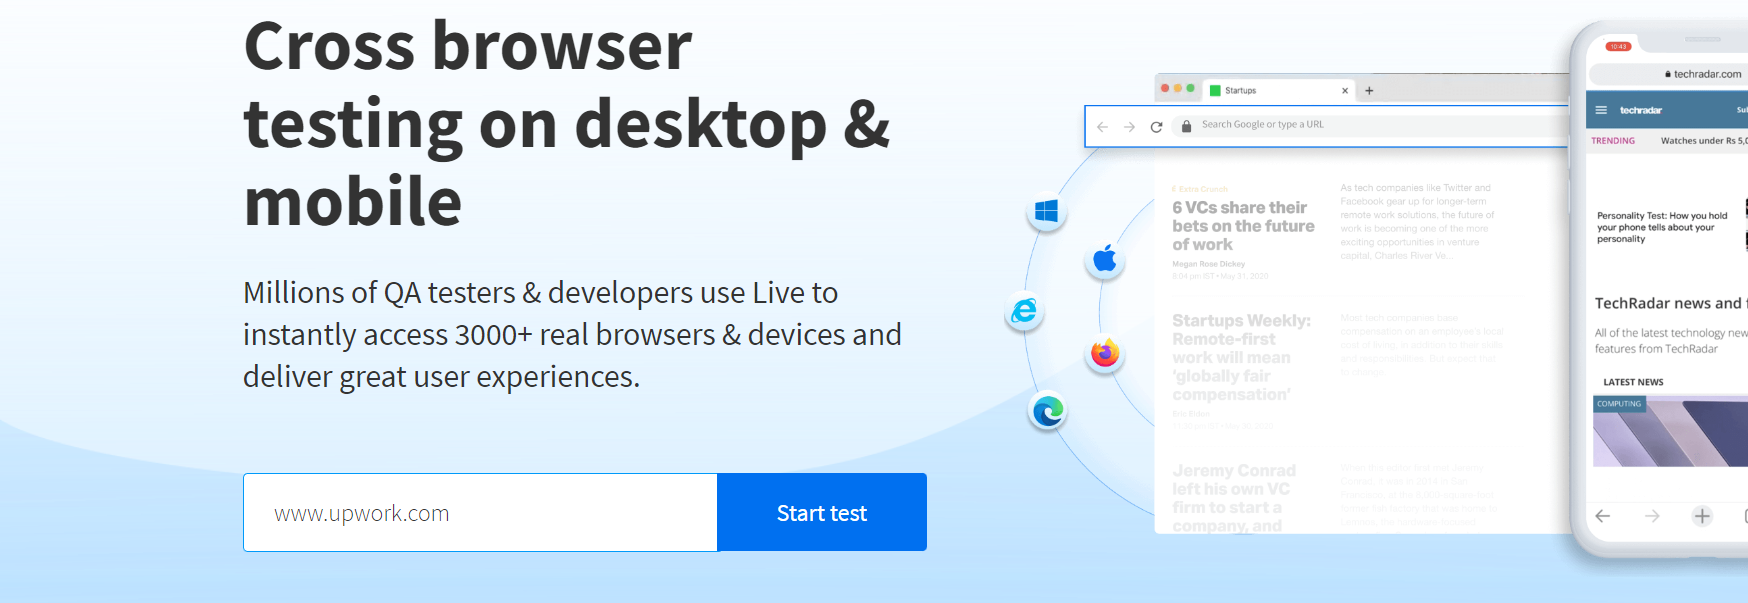 Cross Browser Testing on Desktop and Mobile